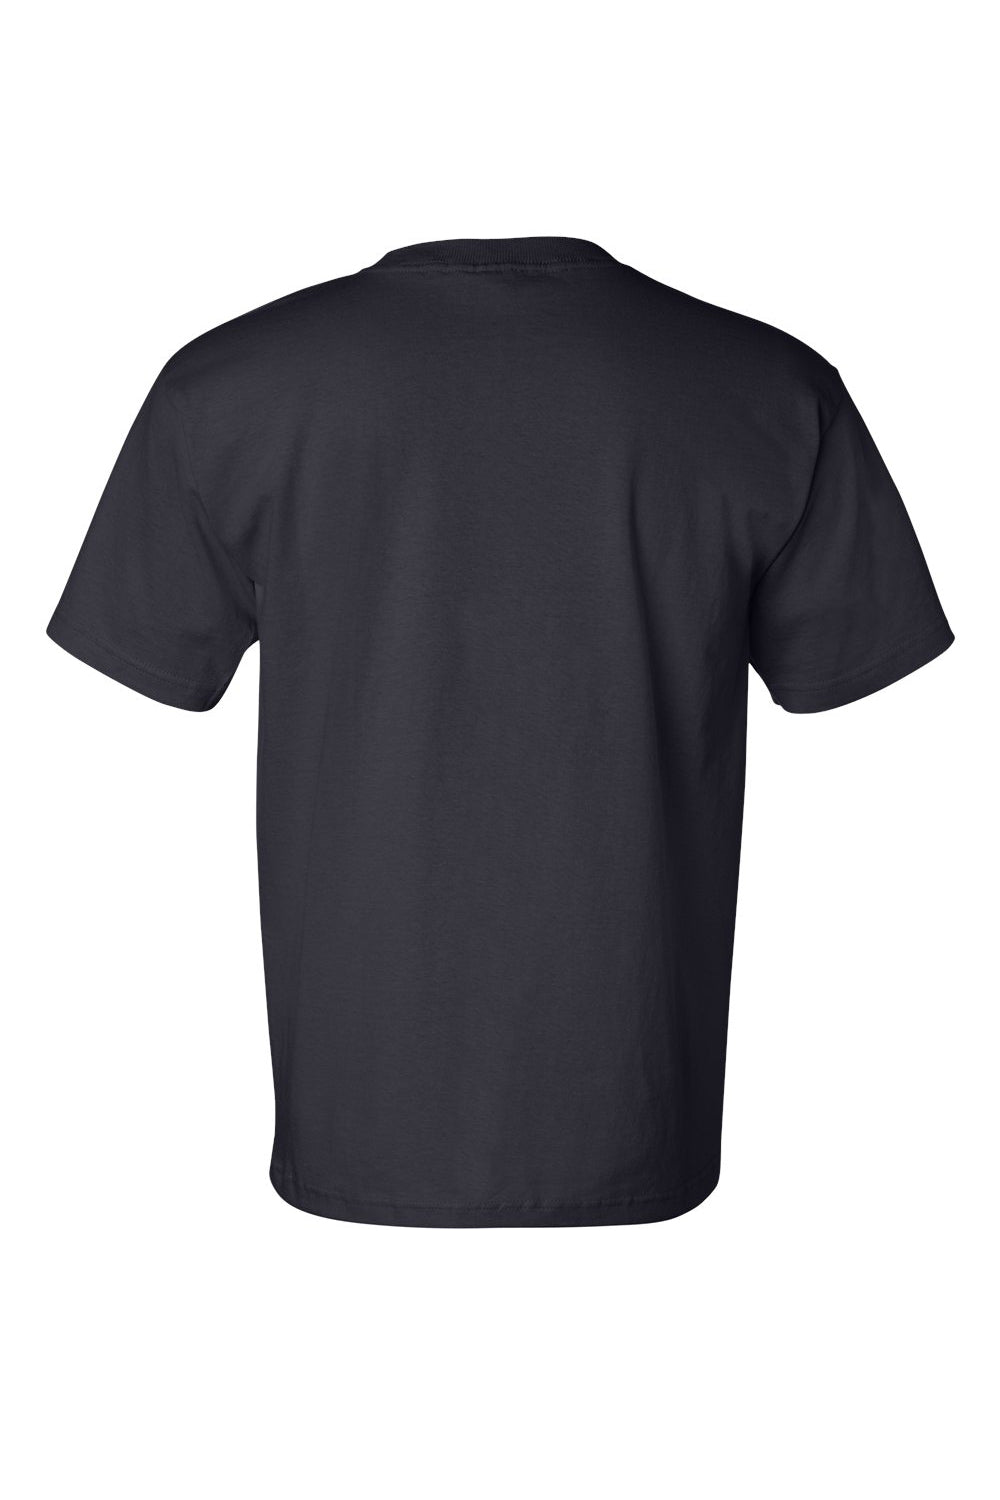 Bayside BA7100 Mens USA Made Short Sleeve Crewneck T-Shirt w/ Pocket Navy Blue Flat Back